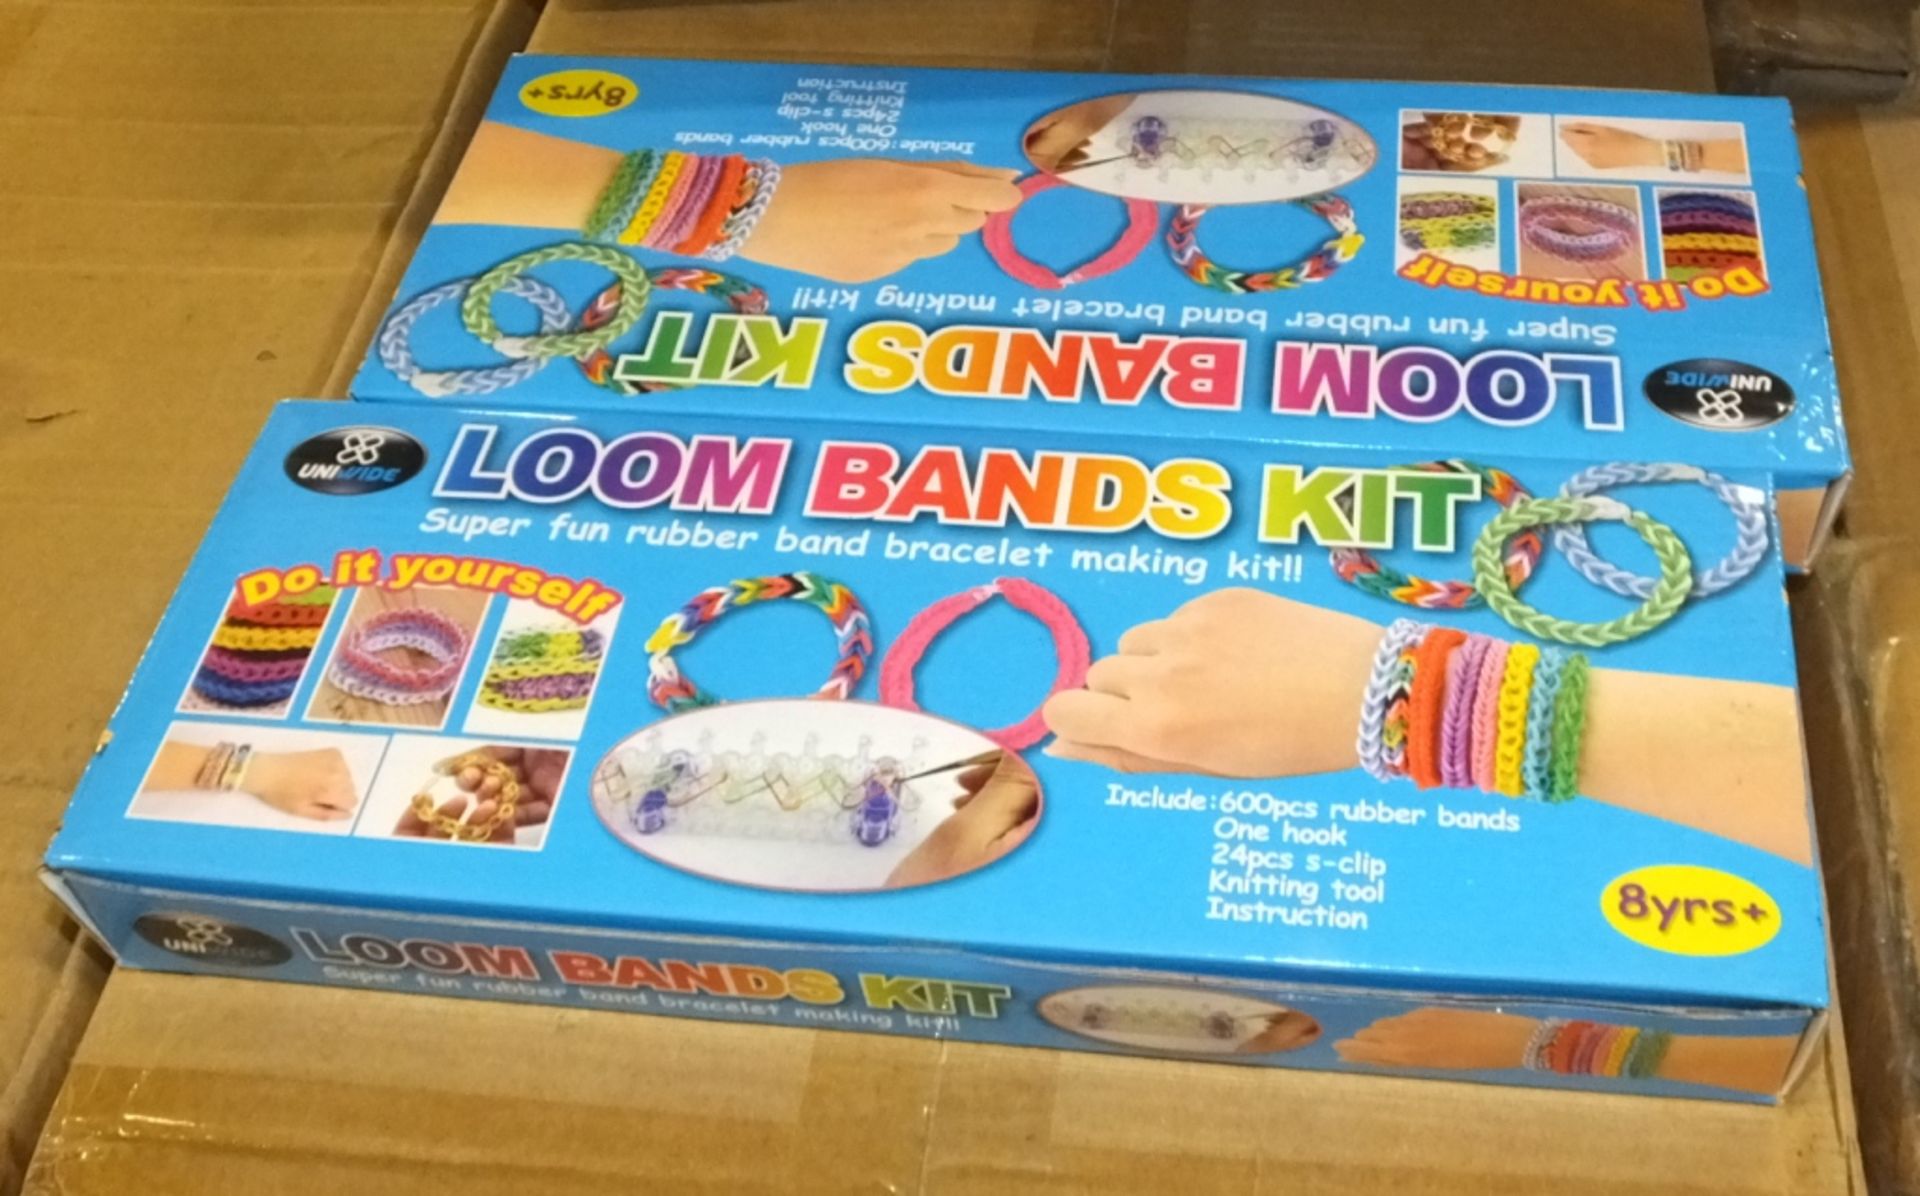 Uniwide Loom band Kits - 24 per box - 43 boxes - Image 2 of 2